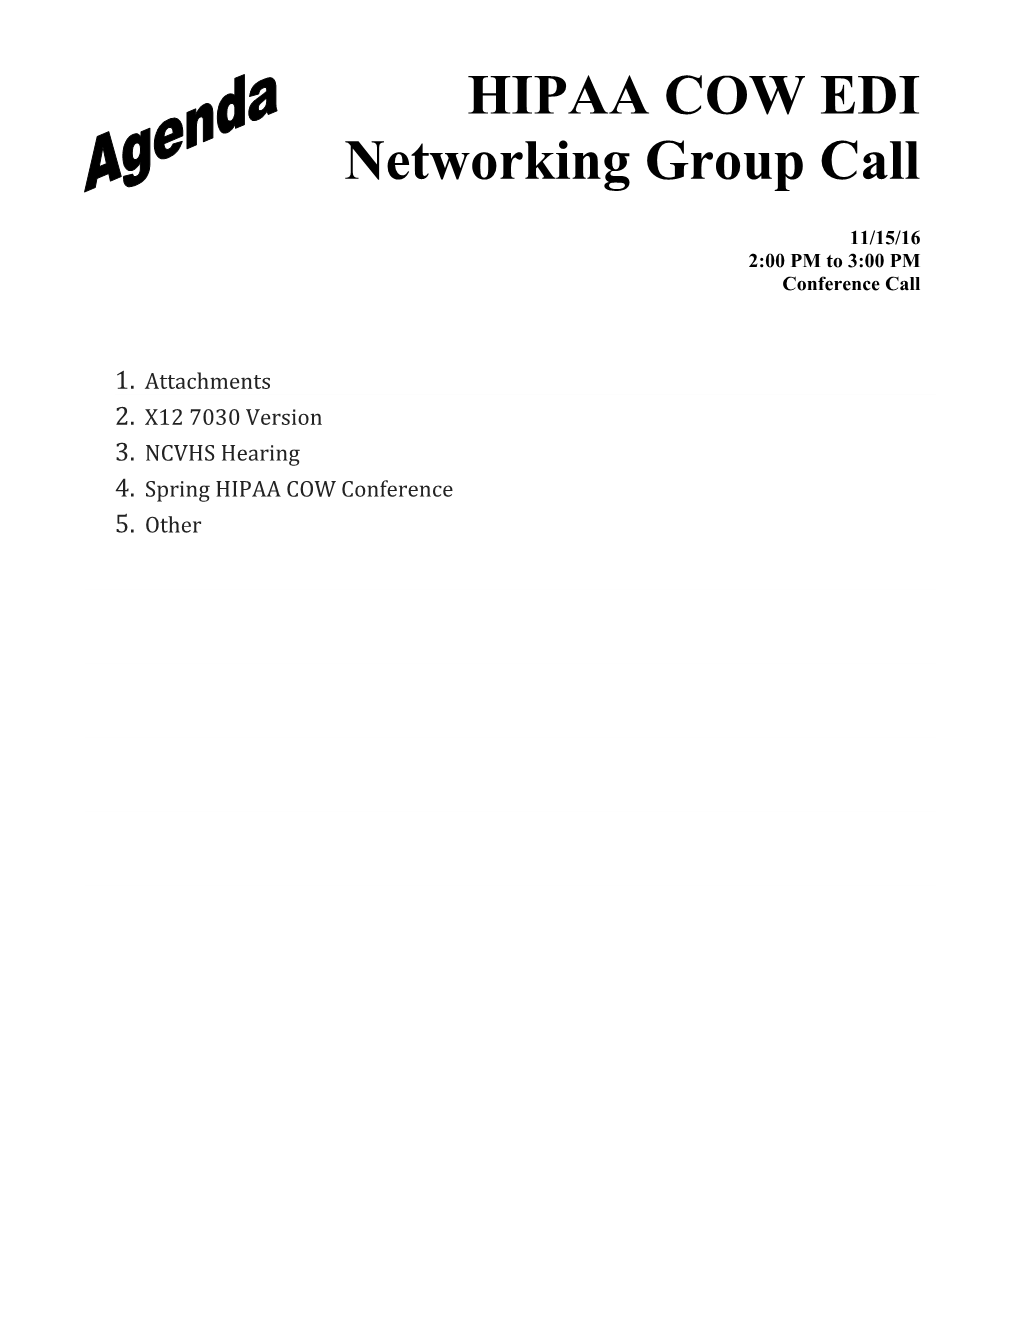 HIPAA COW EDI Workgroup Call